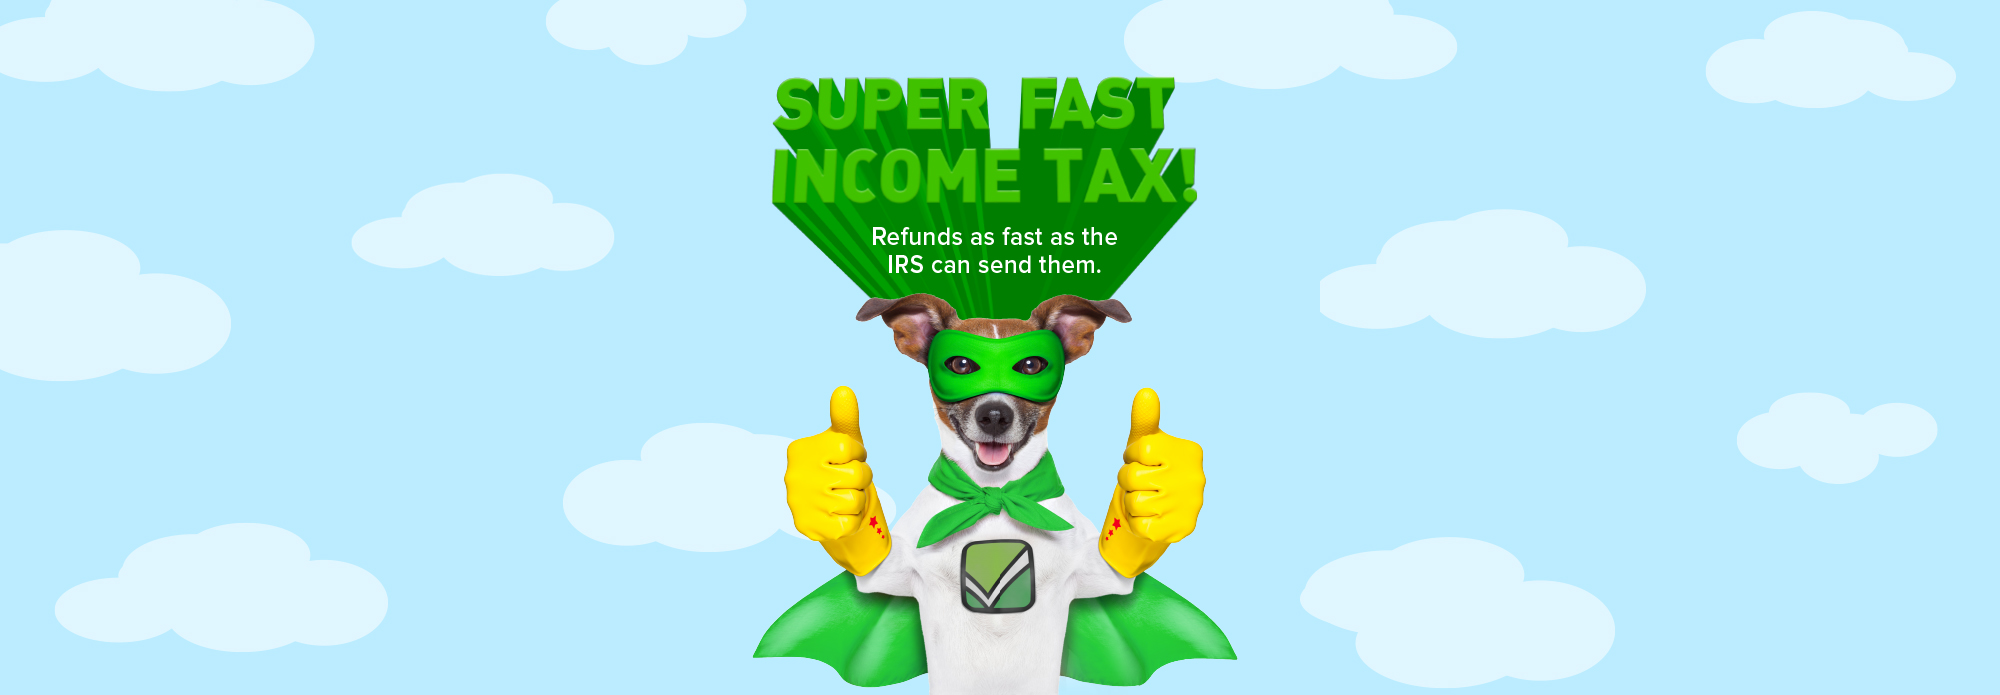 Puma_Accounting_Professional_Income_Tax-header-Super_Fast_Hero.jpg